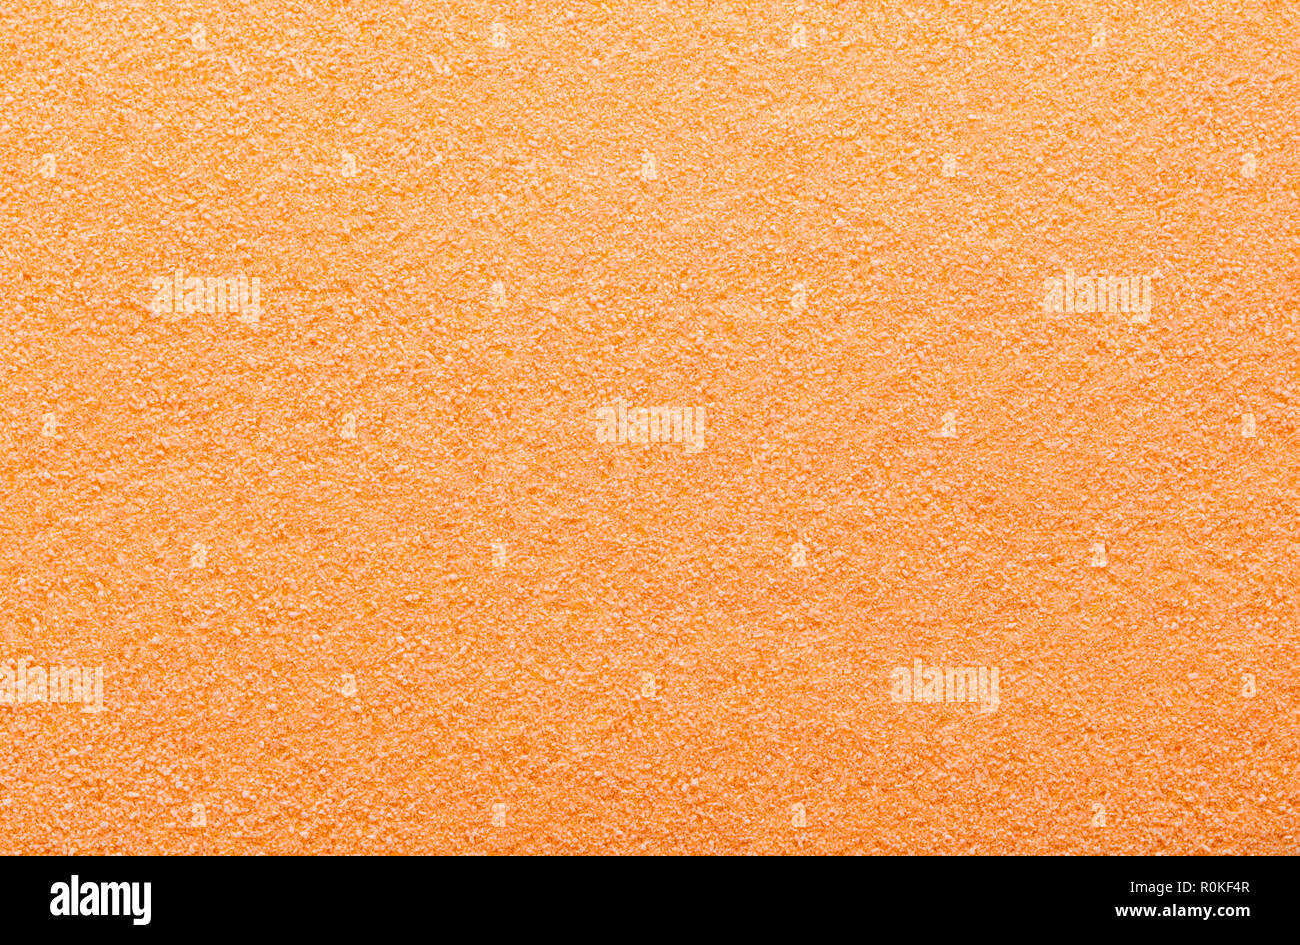 Flat Pile of Orange Sugar Grain Textured Background. Stock Photo